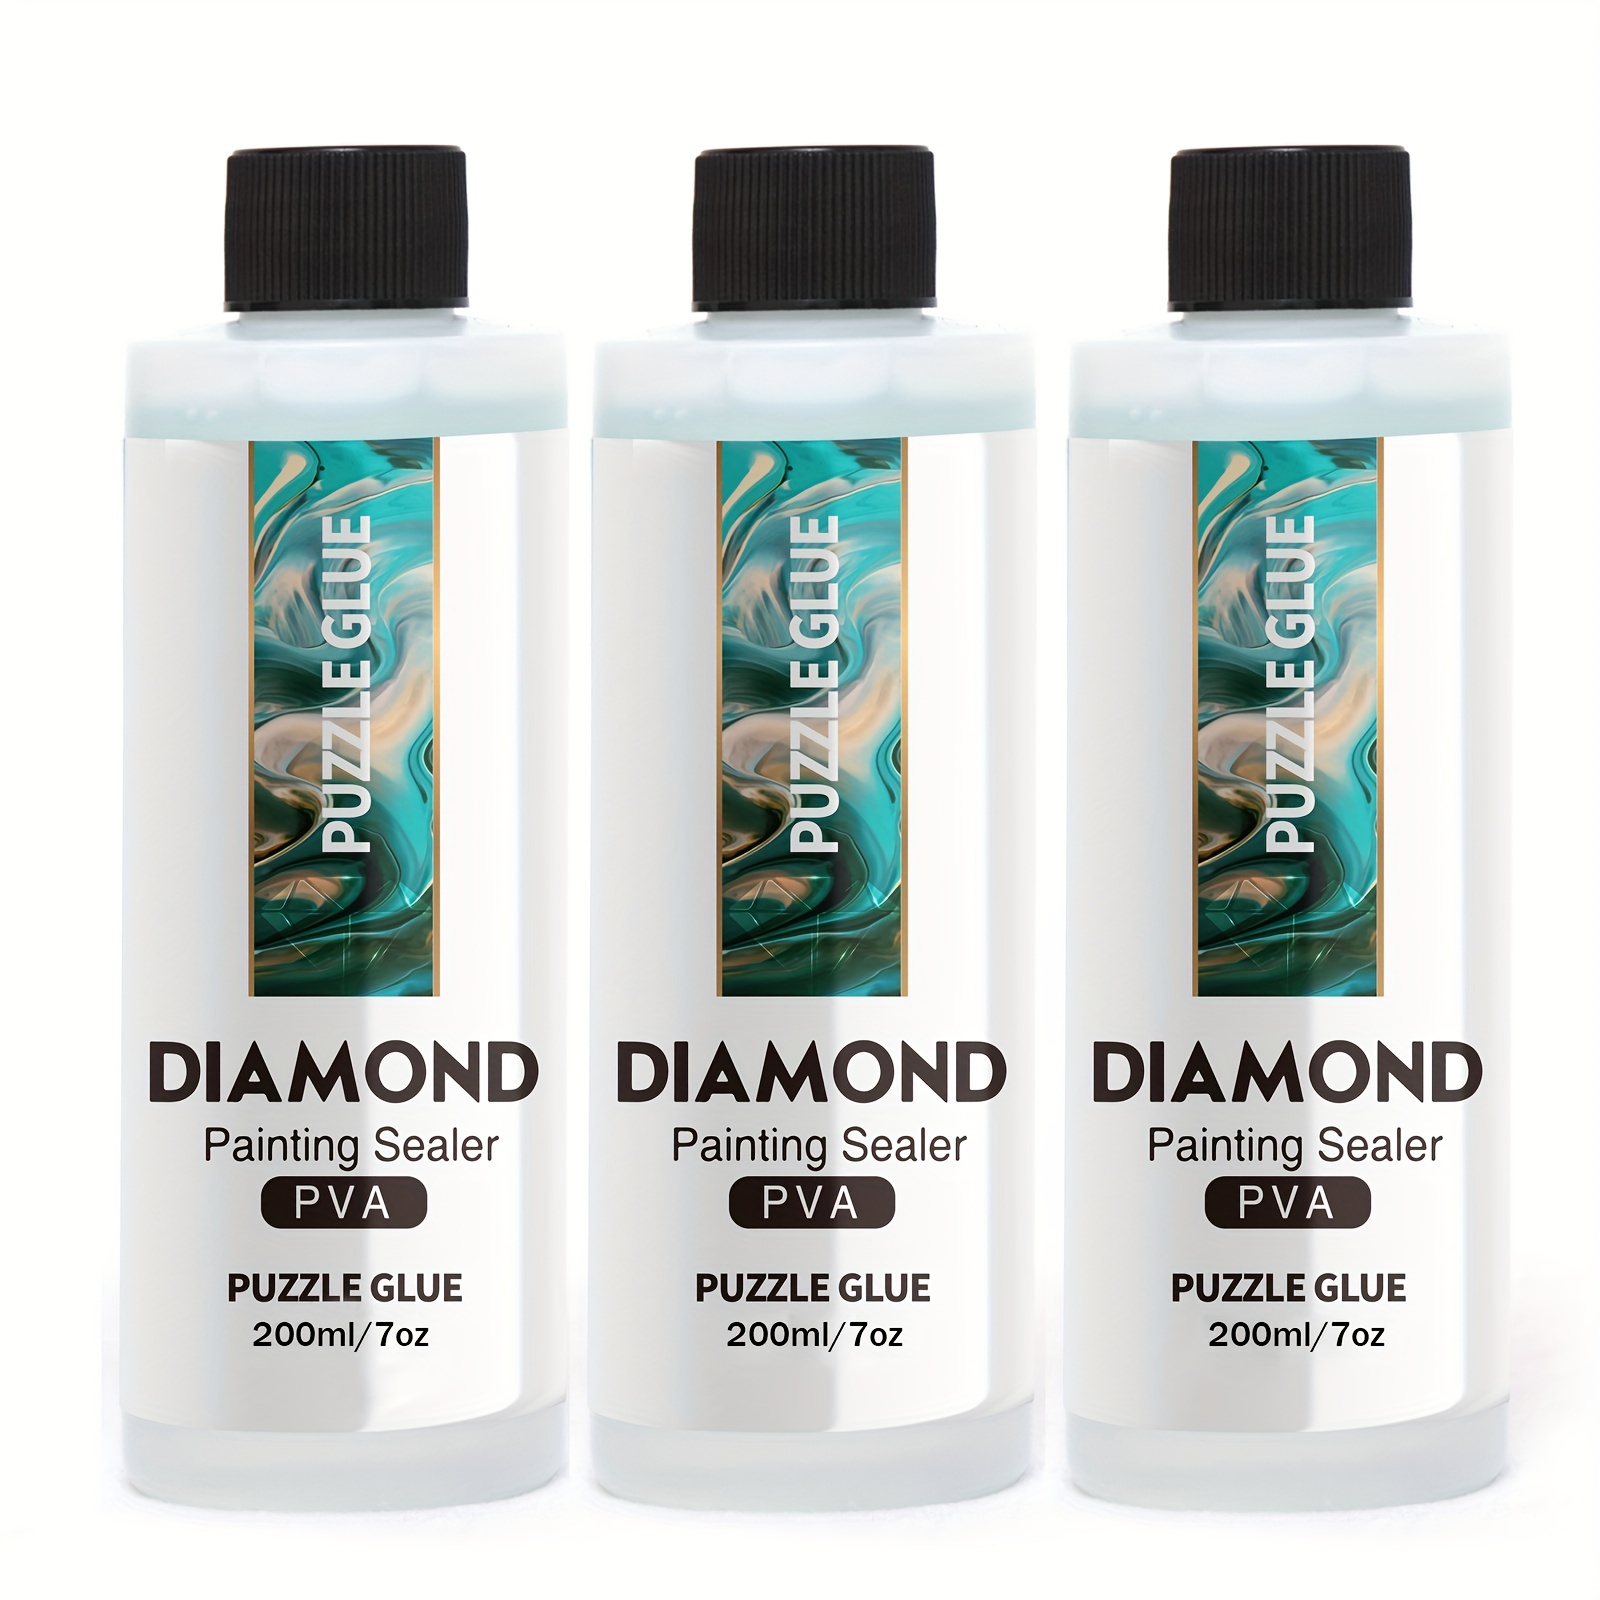 Diamond Painting Sealer 120ML with Sponge Head, 5D Diamond Painting Glue  and Jig